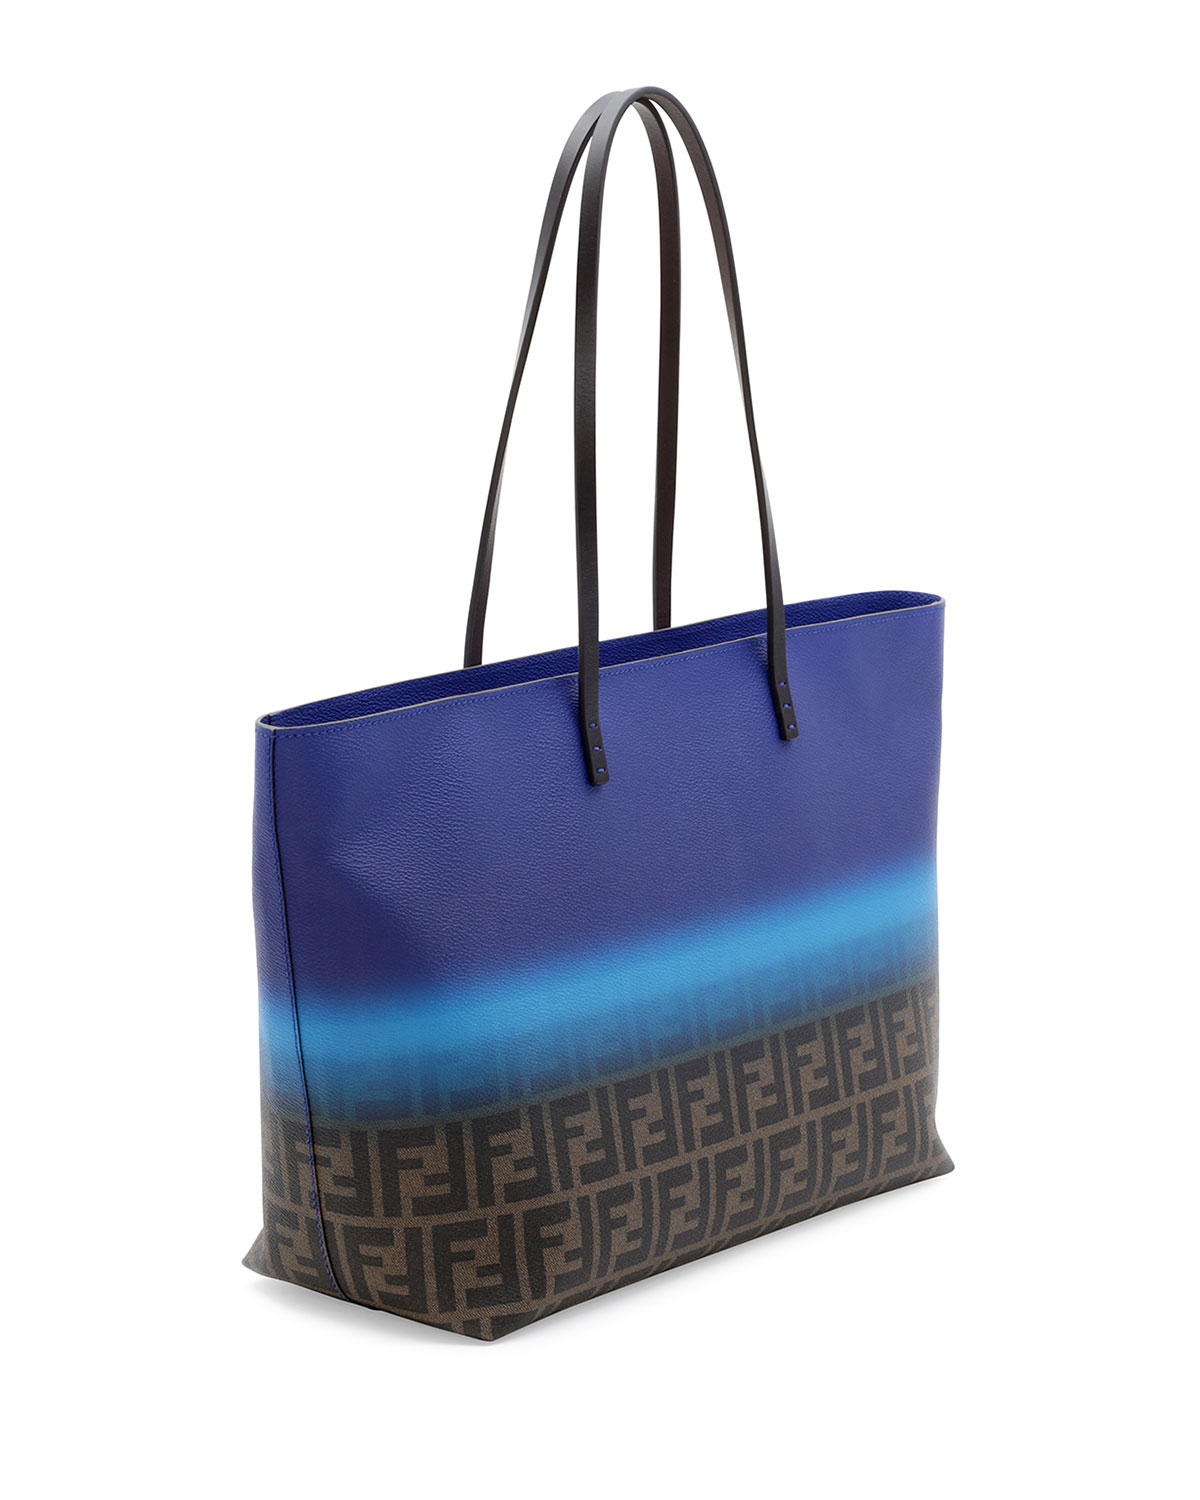 Fendi Painted Zucca Medium Roll Tote Bag in Blue - Lyst